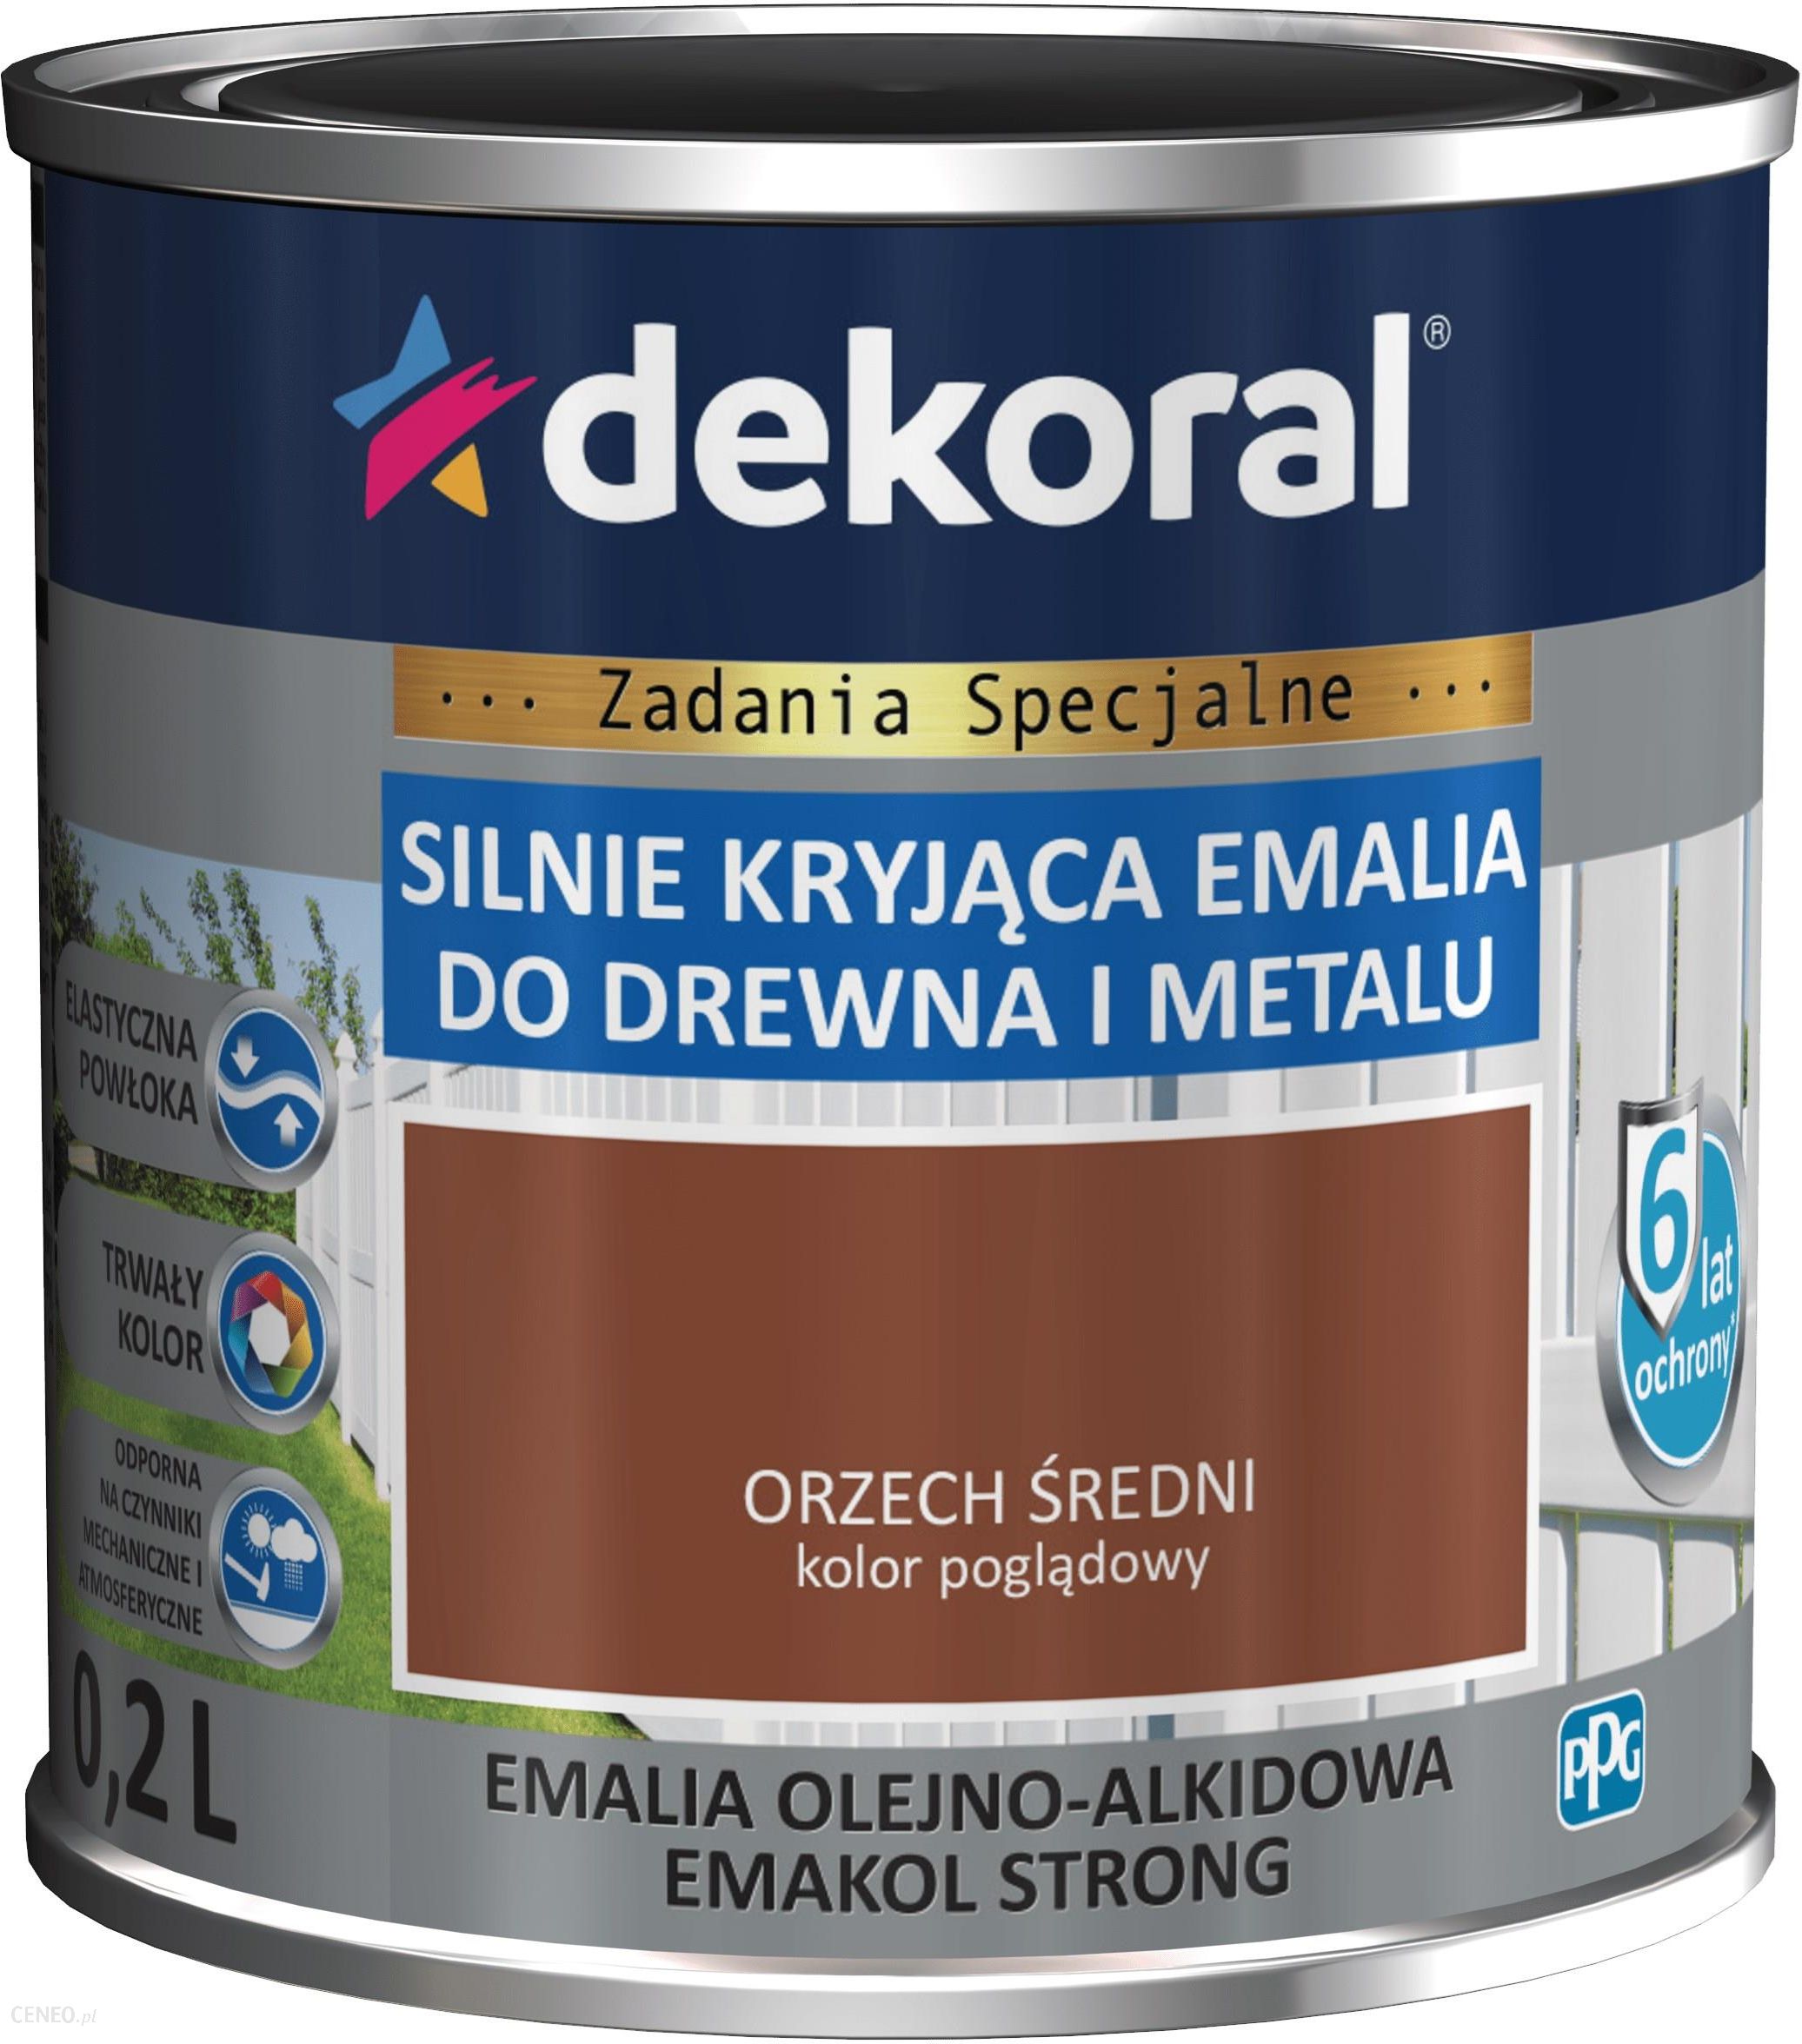  Dekoral Emakol Strong Do Drewna I Metalu Orzech Średni 0,2L